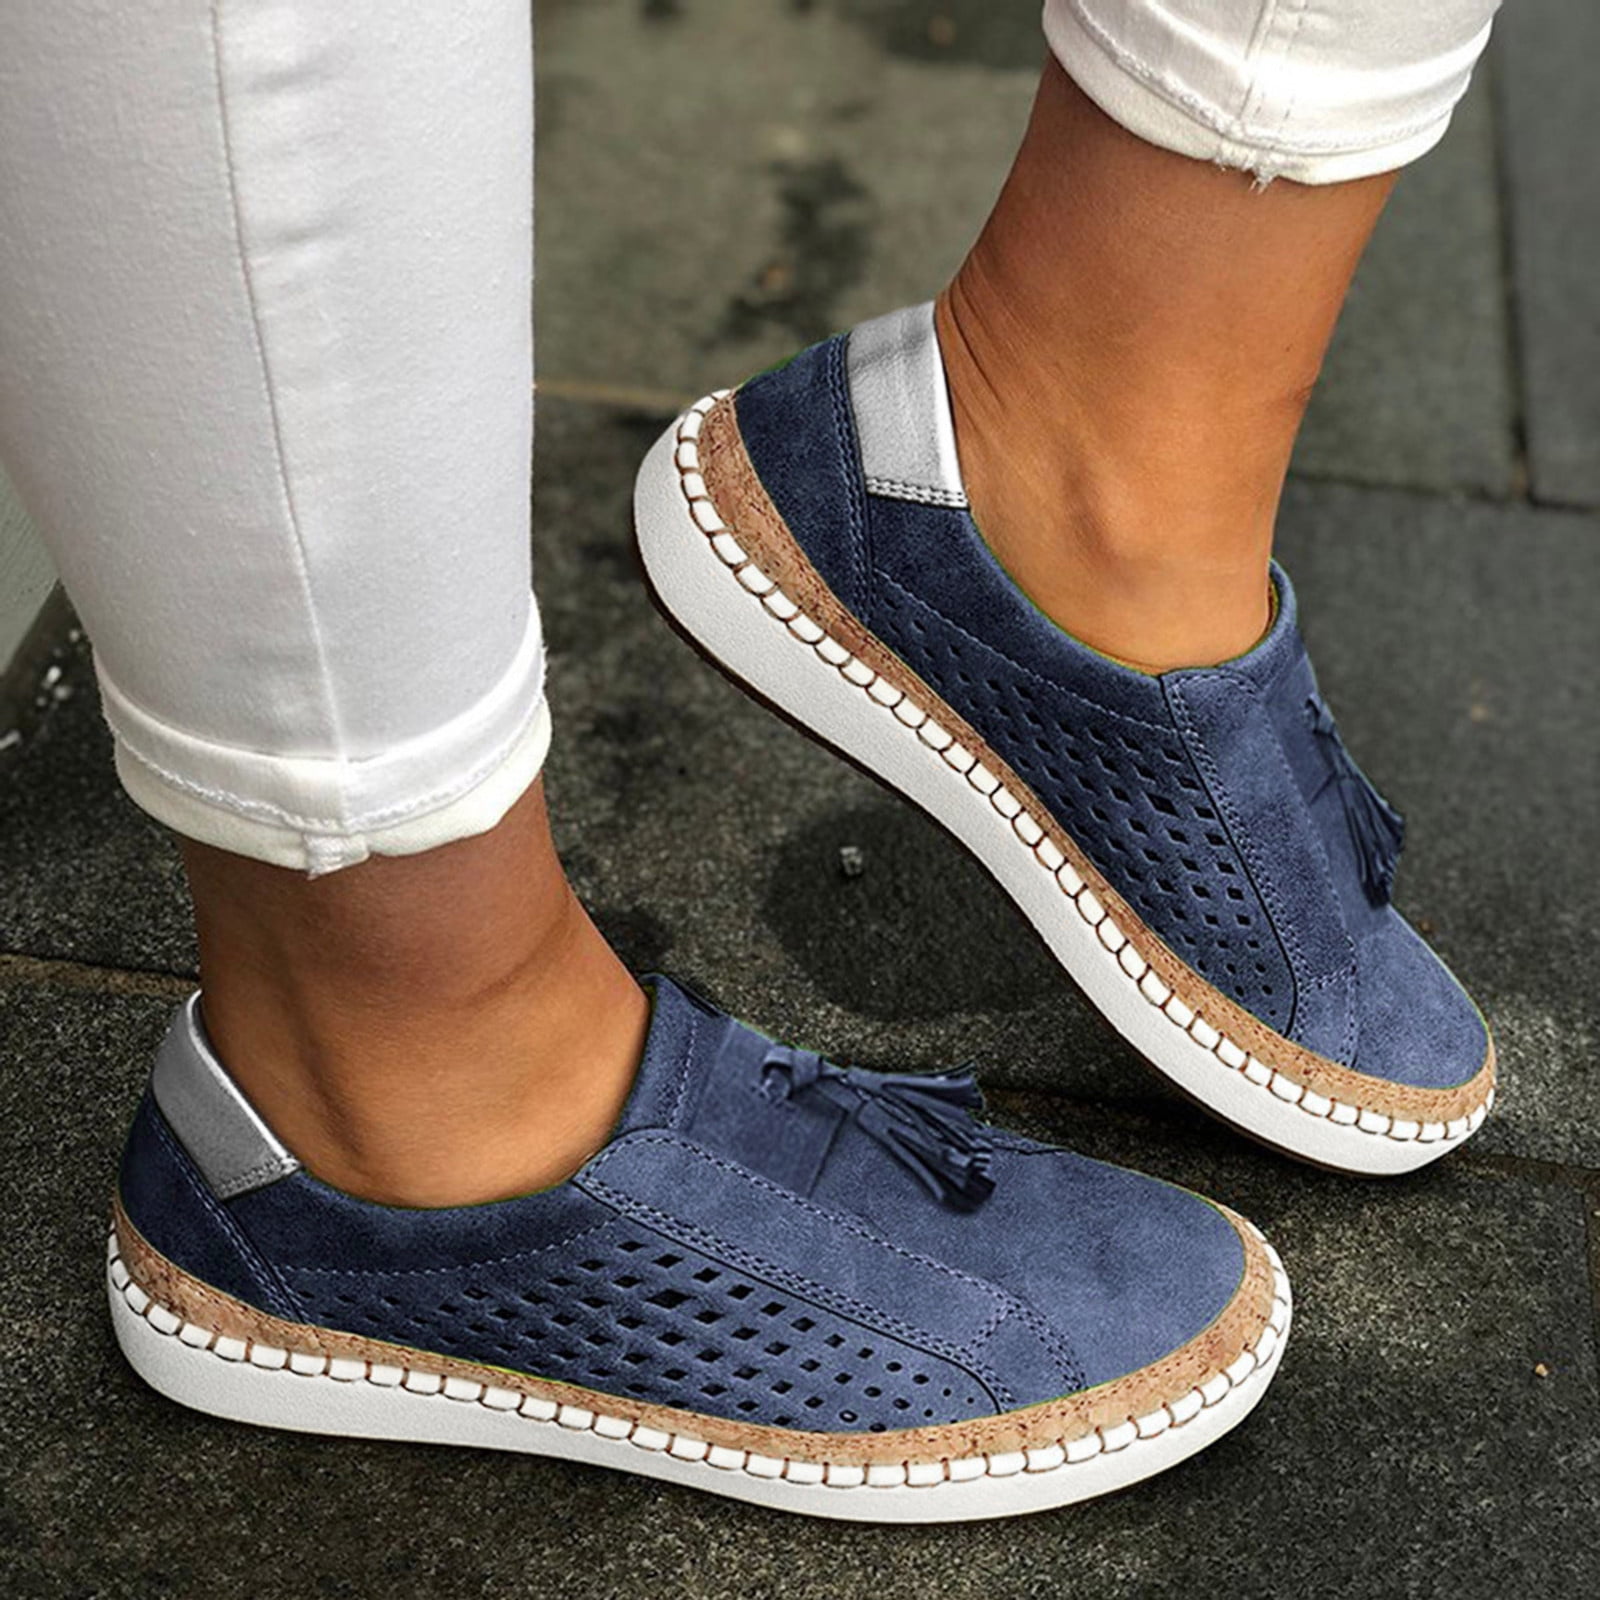 Womens Flat Loafers Casual Ladies Fringe Tassel Slip On Office Work School Pumps Comfort Smart Moccasins Shoes